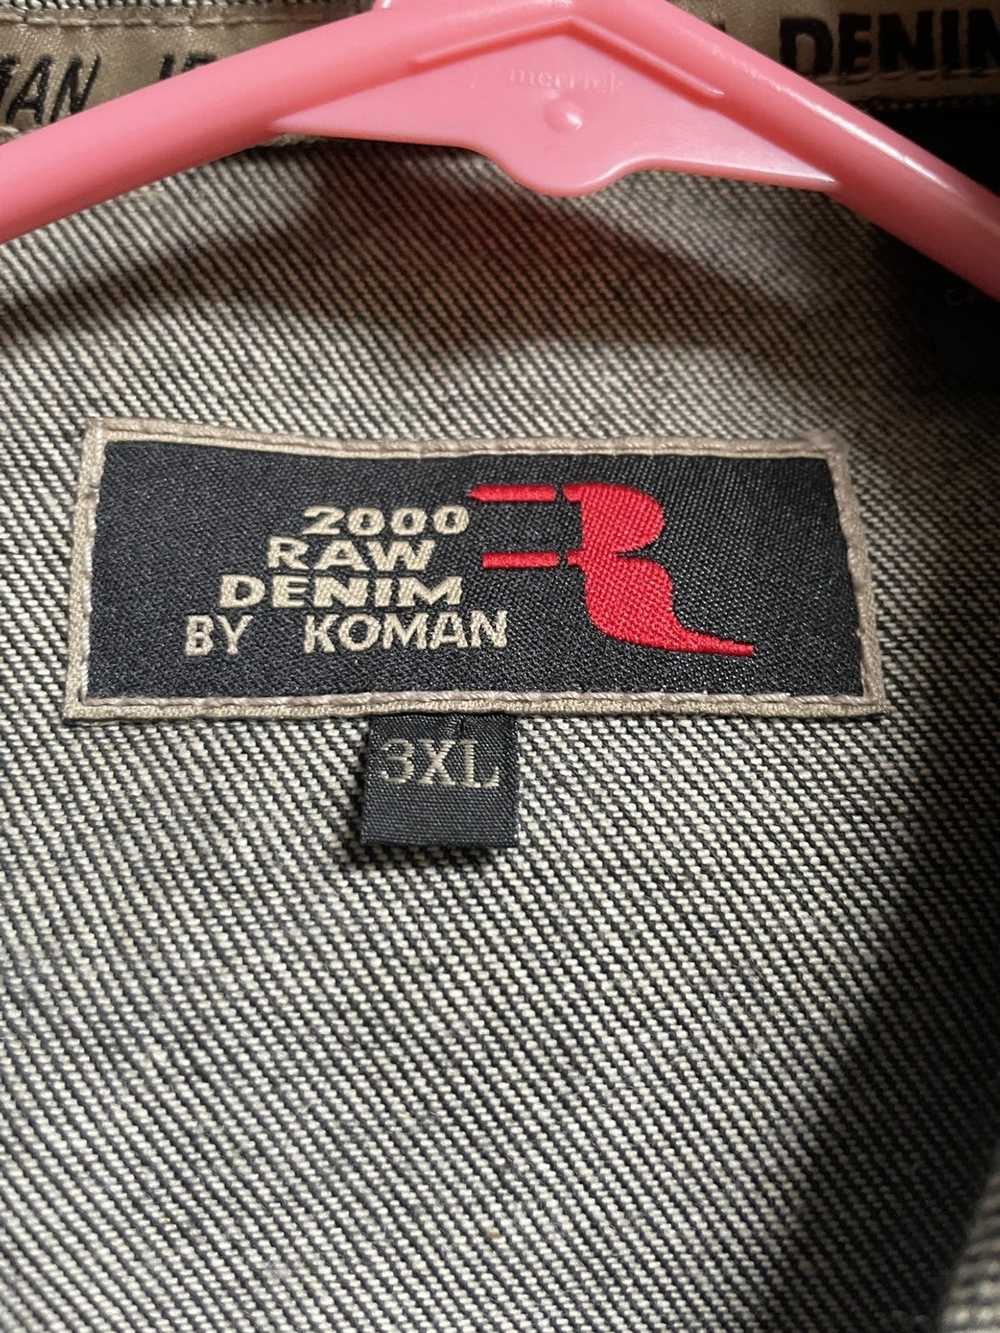 Koman Koman raw denim jacket - image 2